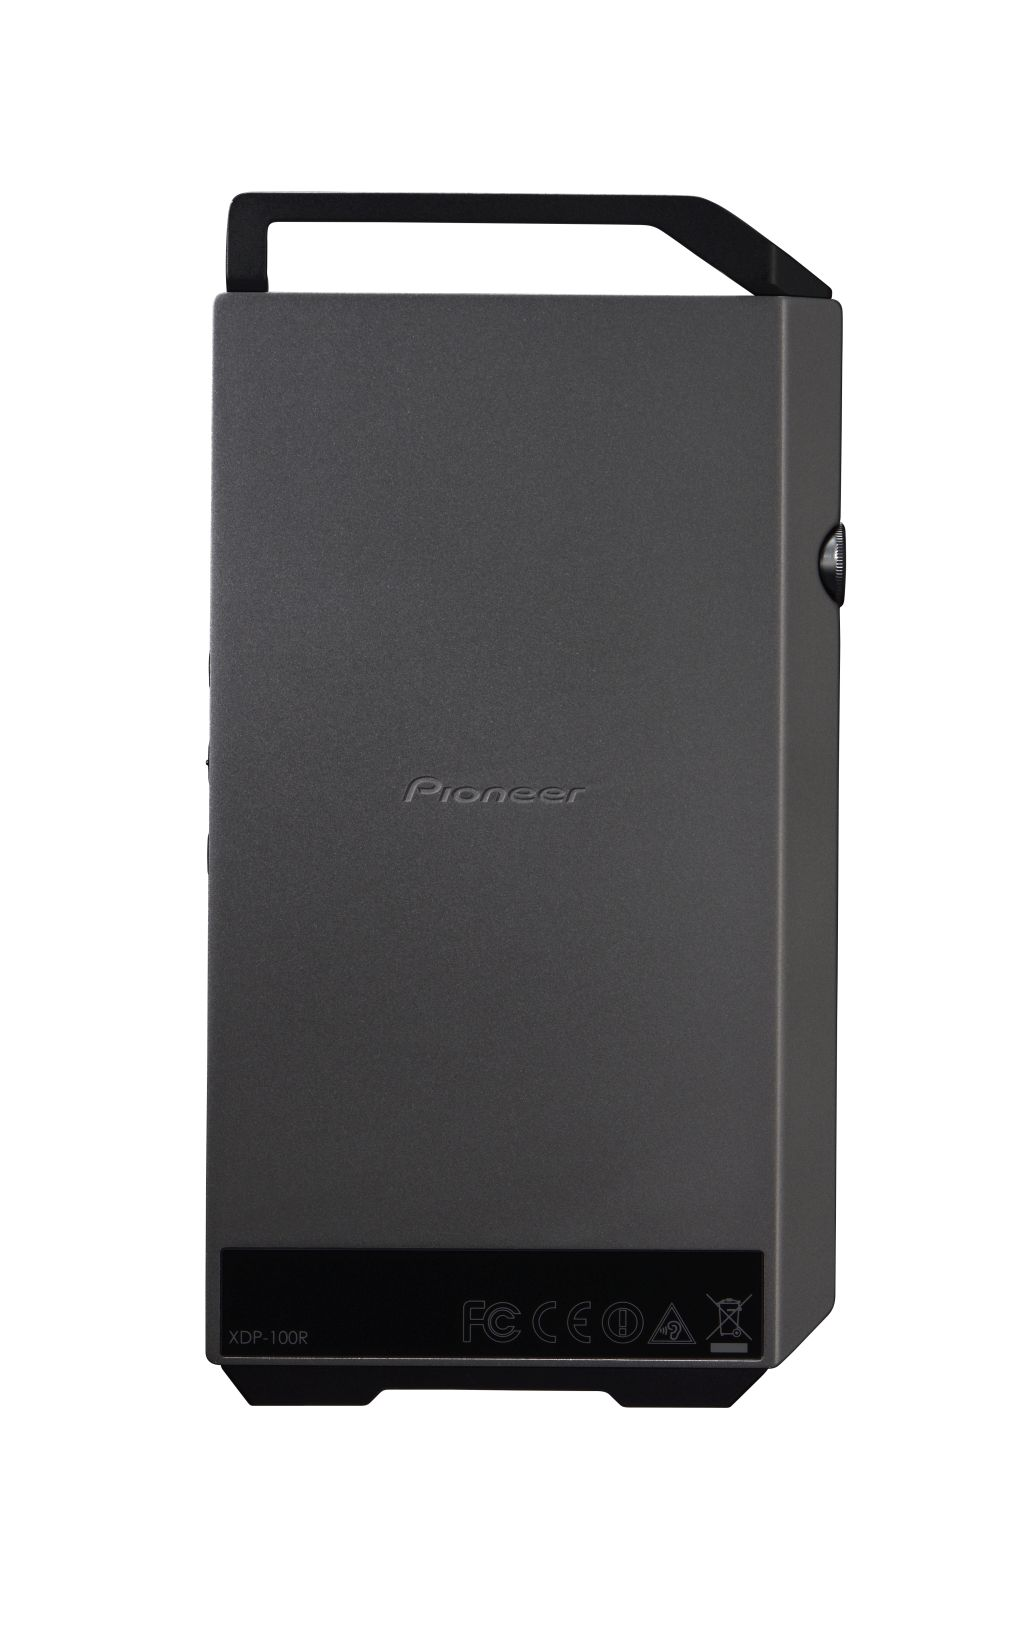 Schwarz GB, XDP-100R 32 PIONEER Audioplayer